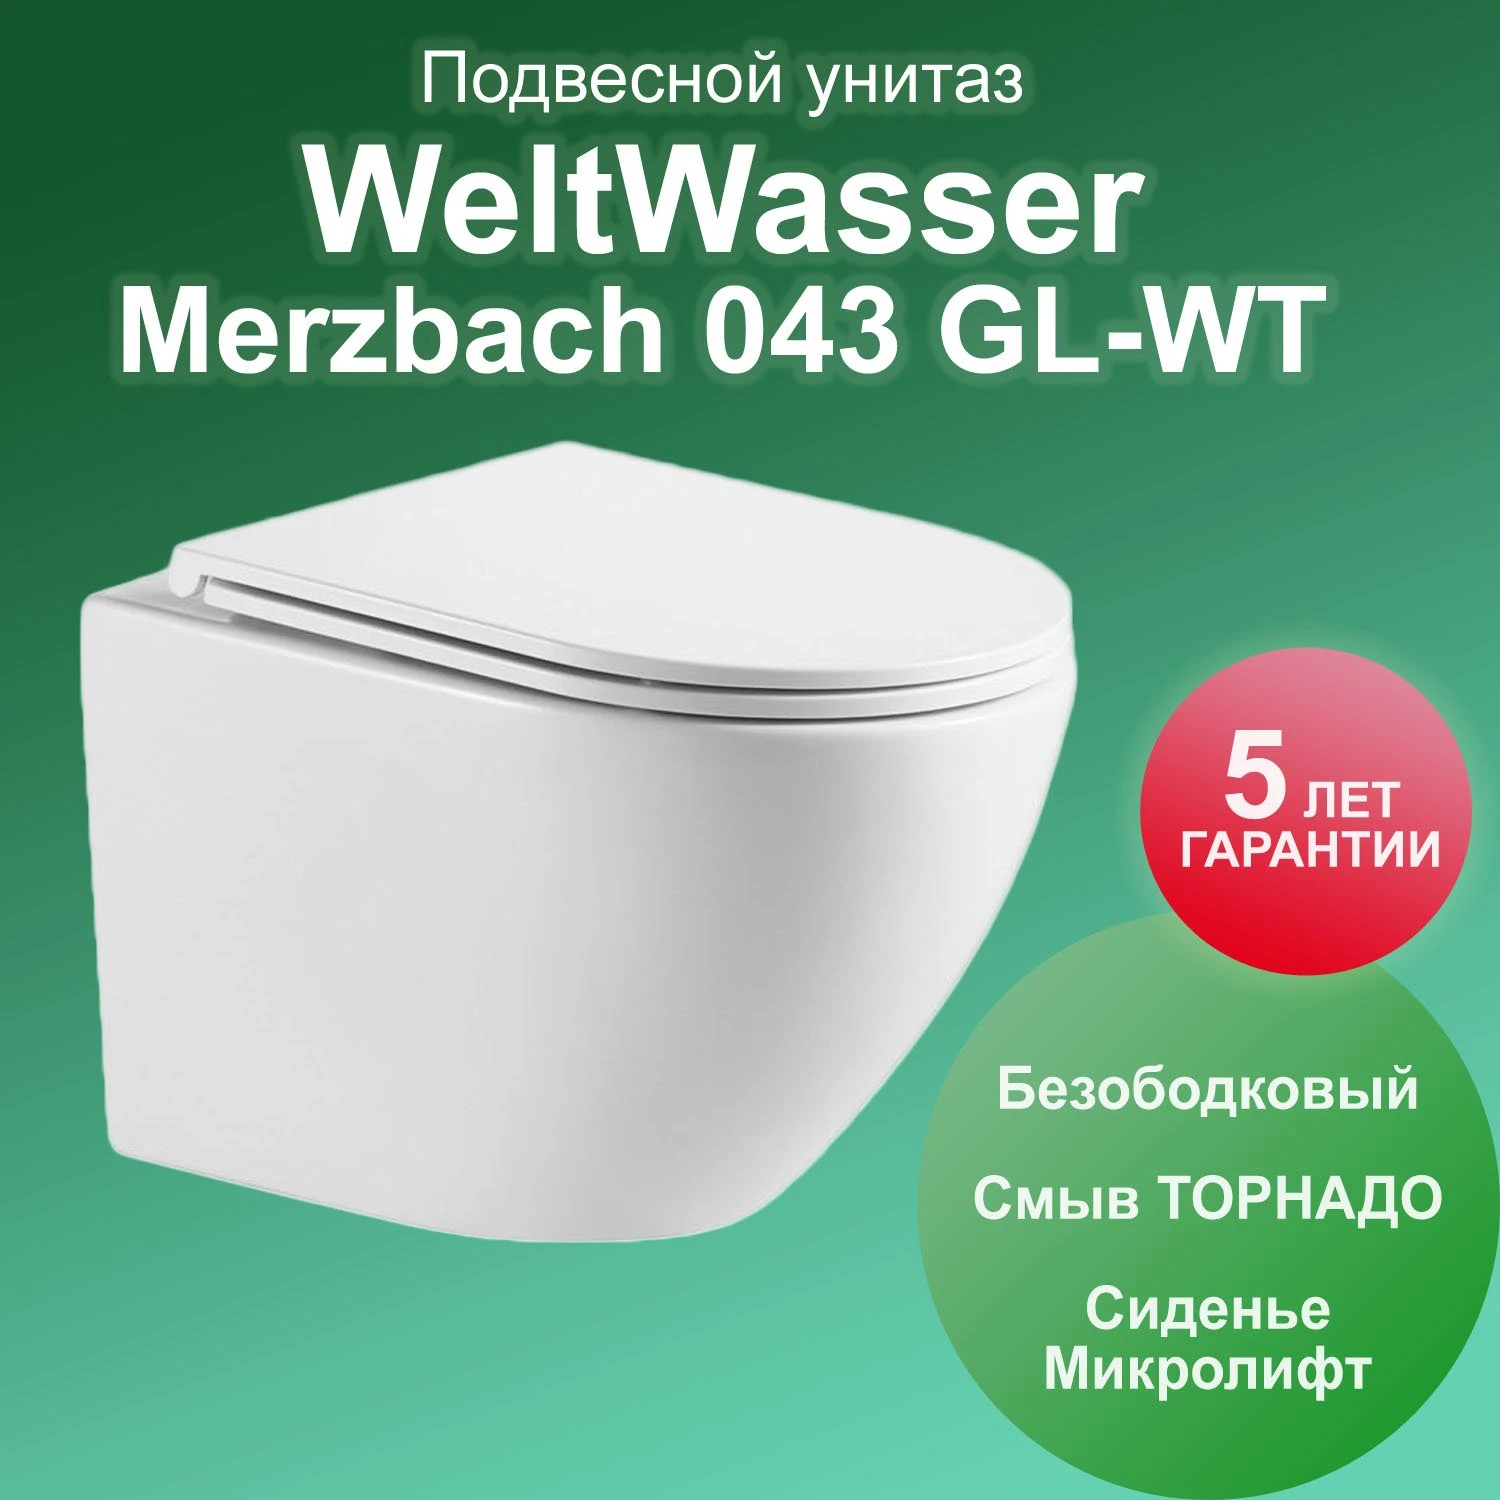 Комплект: Weltwasser Инсталляция Bamberg 525+Кнопка Bamberg WT белая+Merzbach 043 GL-WT белый унитаз - фото 1